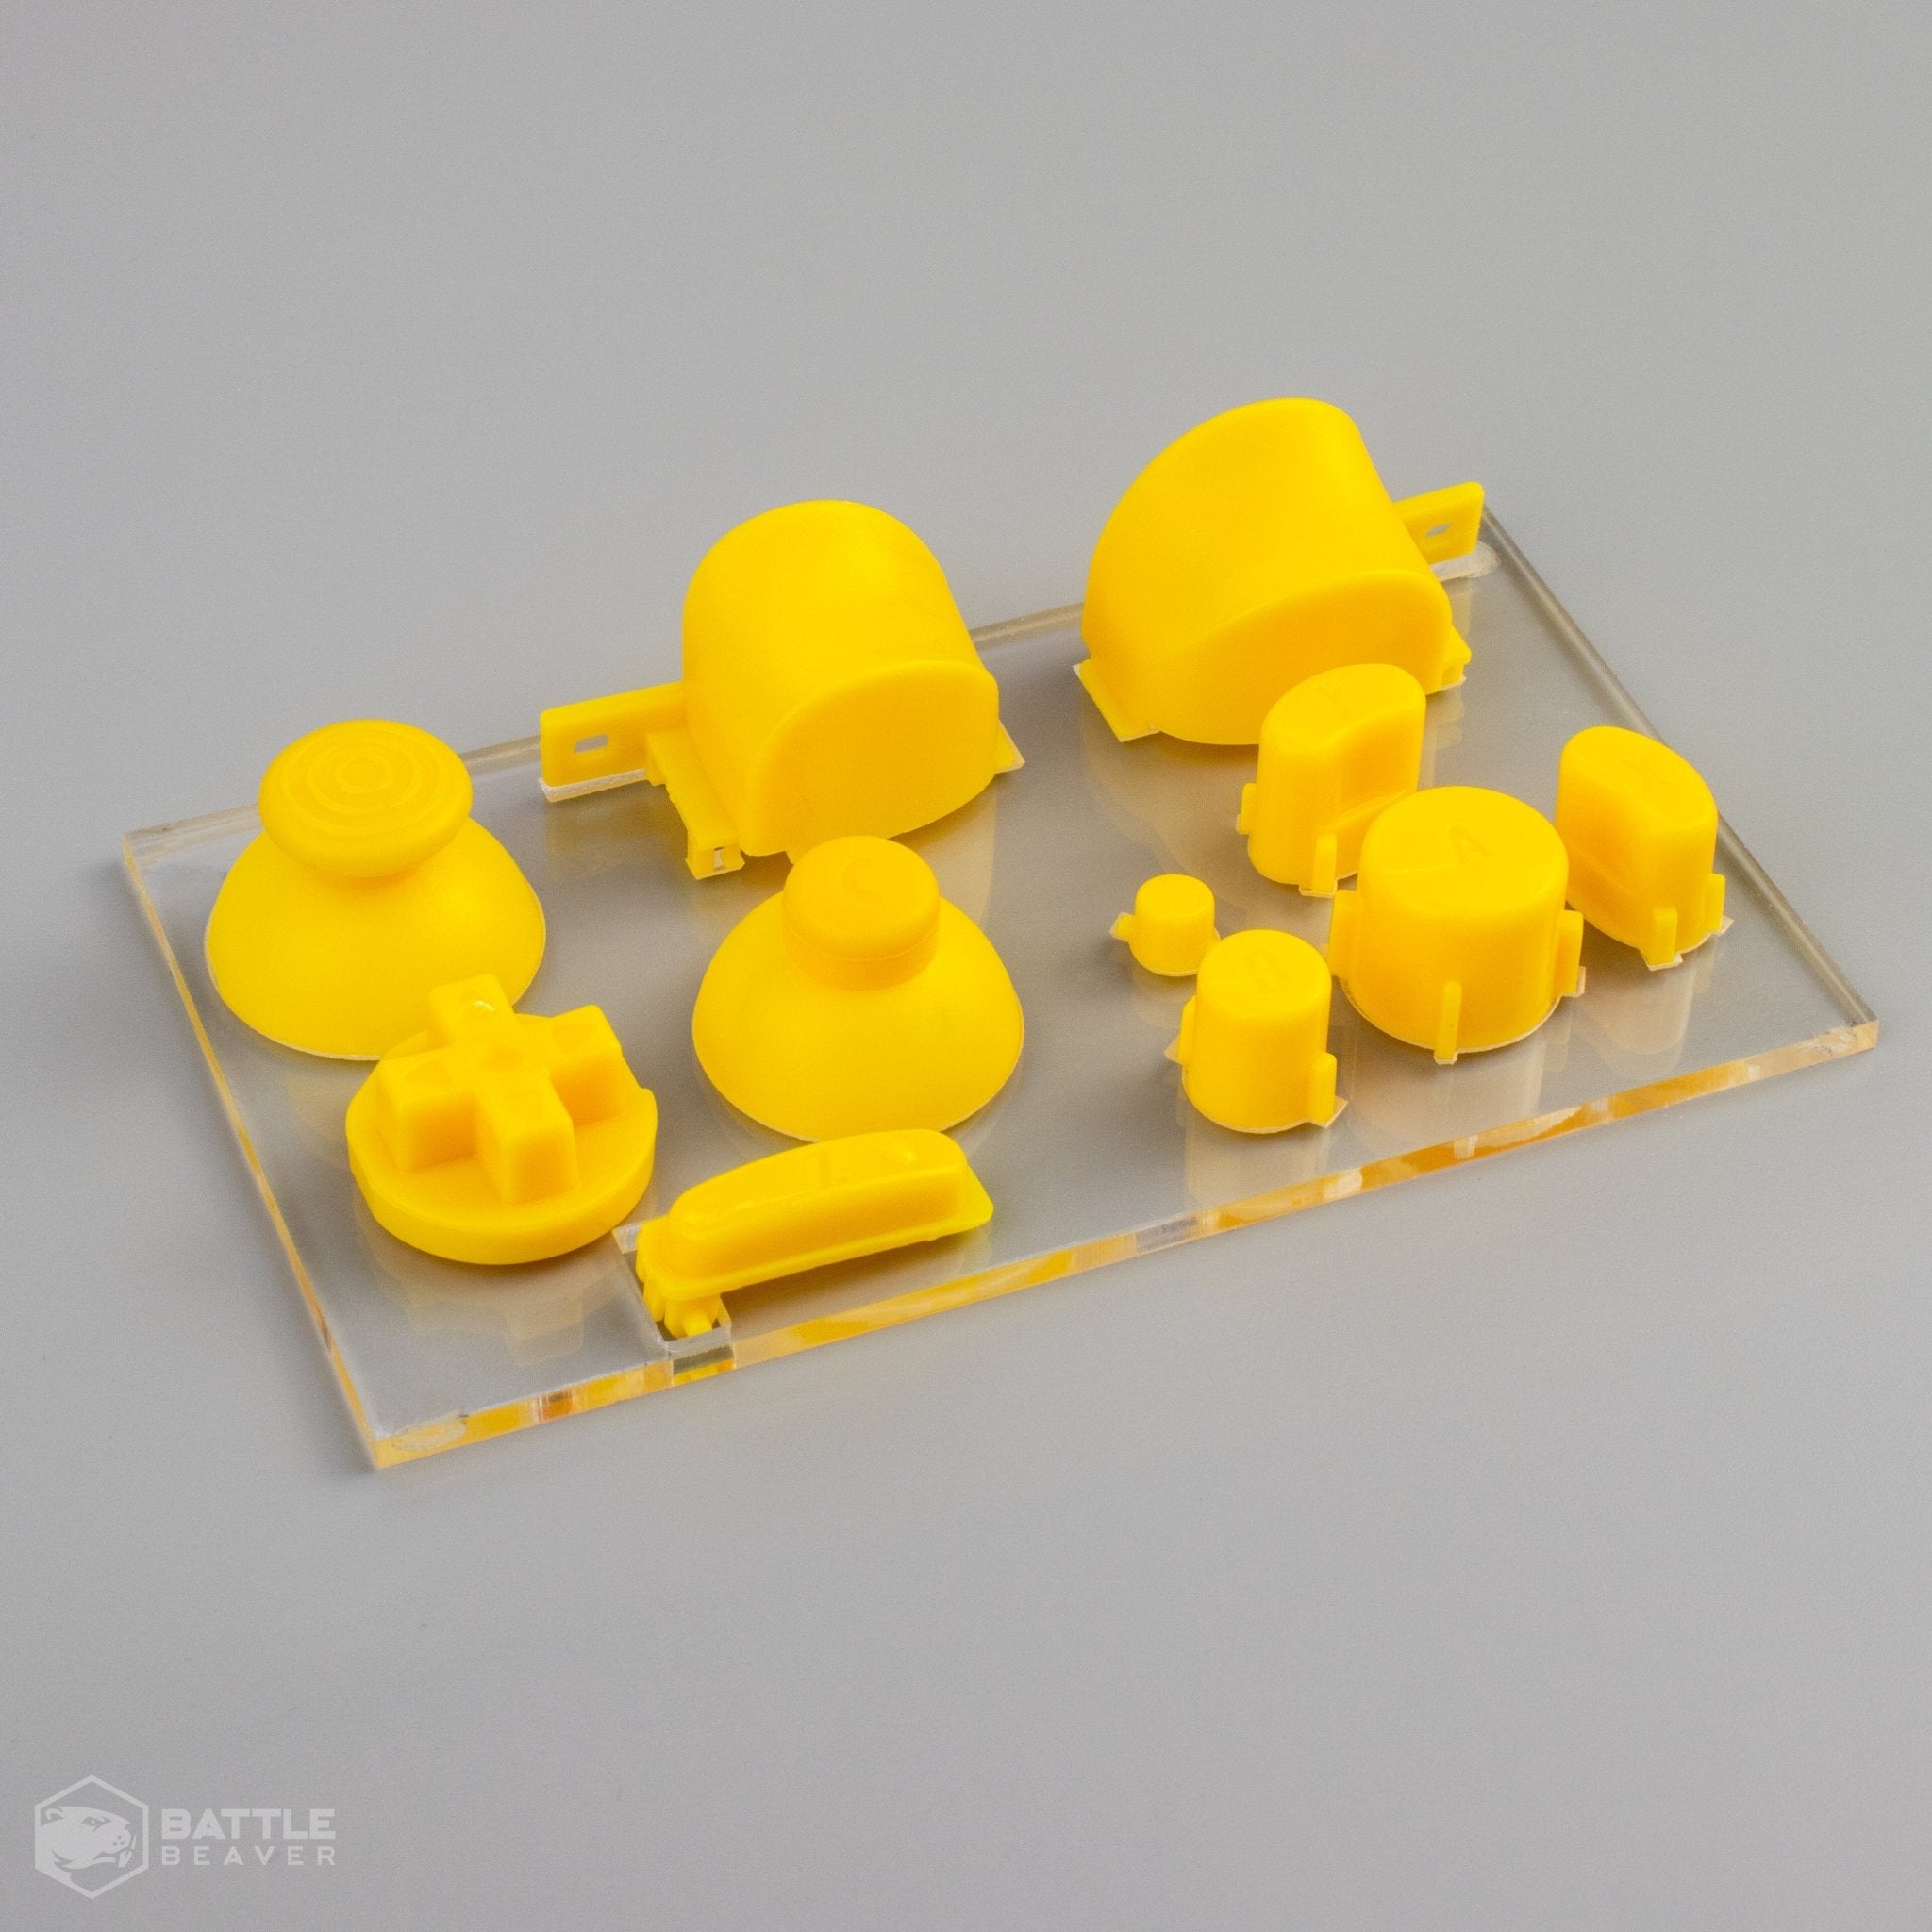 3rd Party Gamecube Parts Kit - Battle Beaver Customs - Yellow